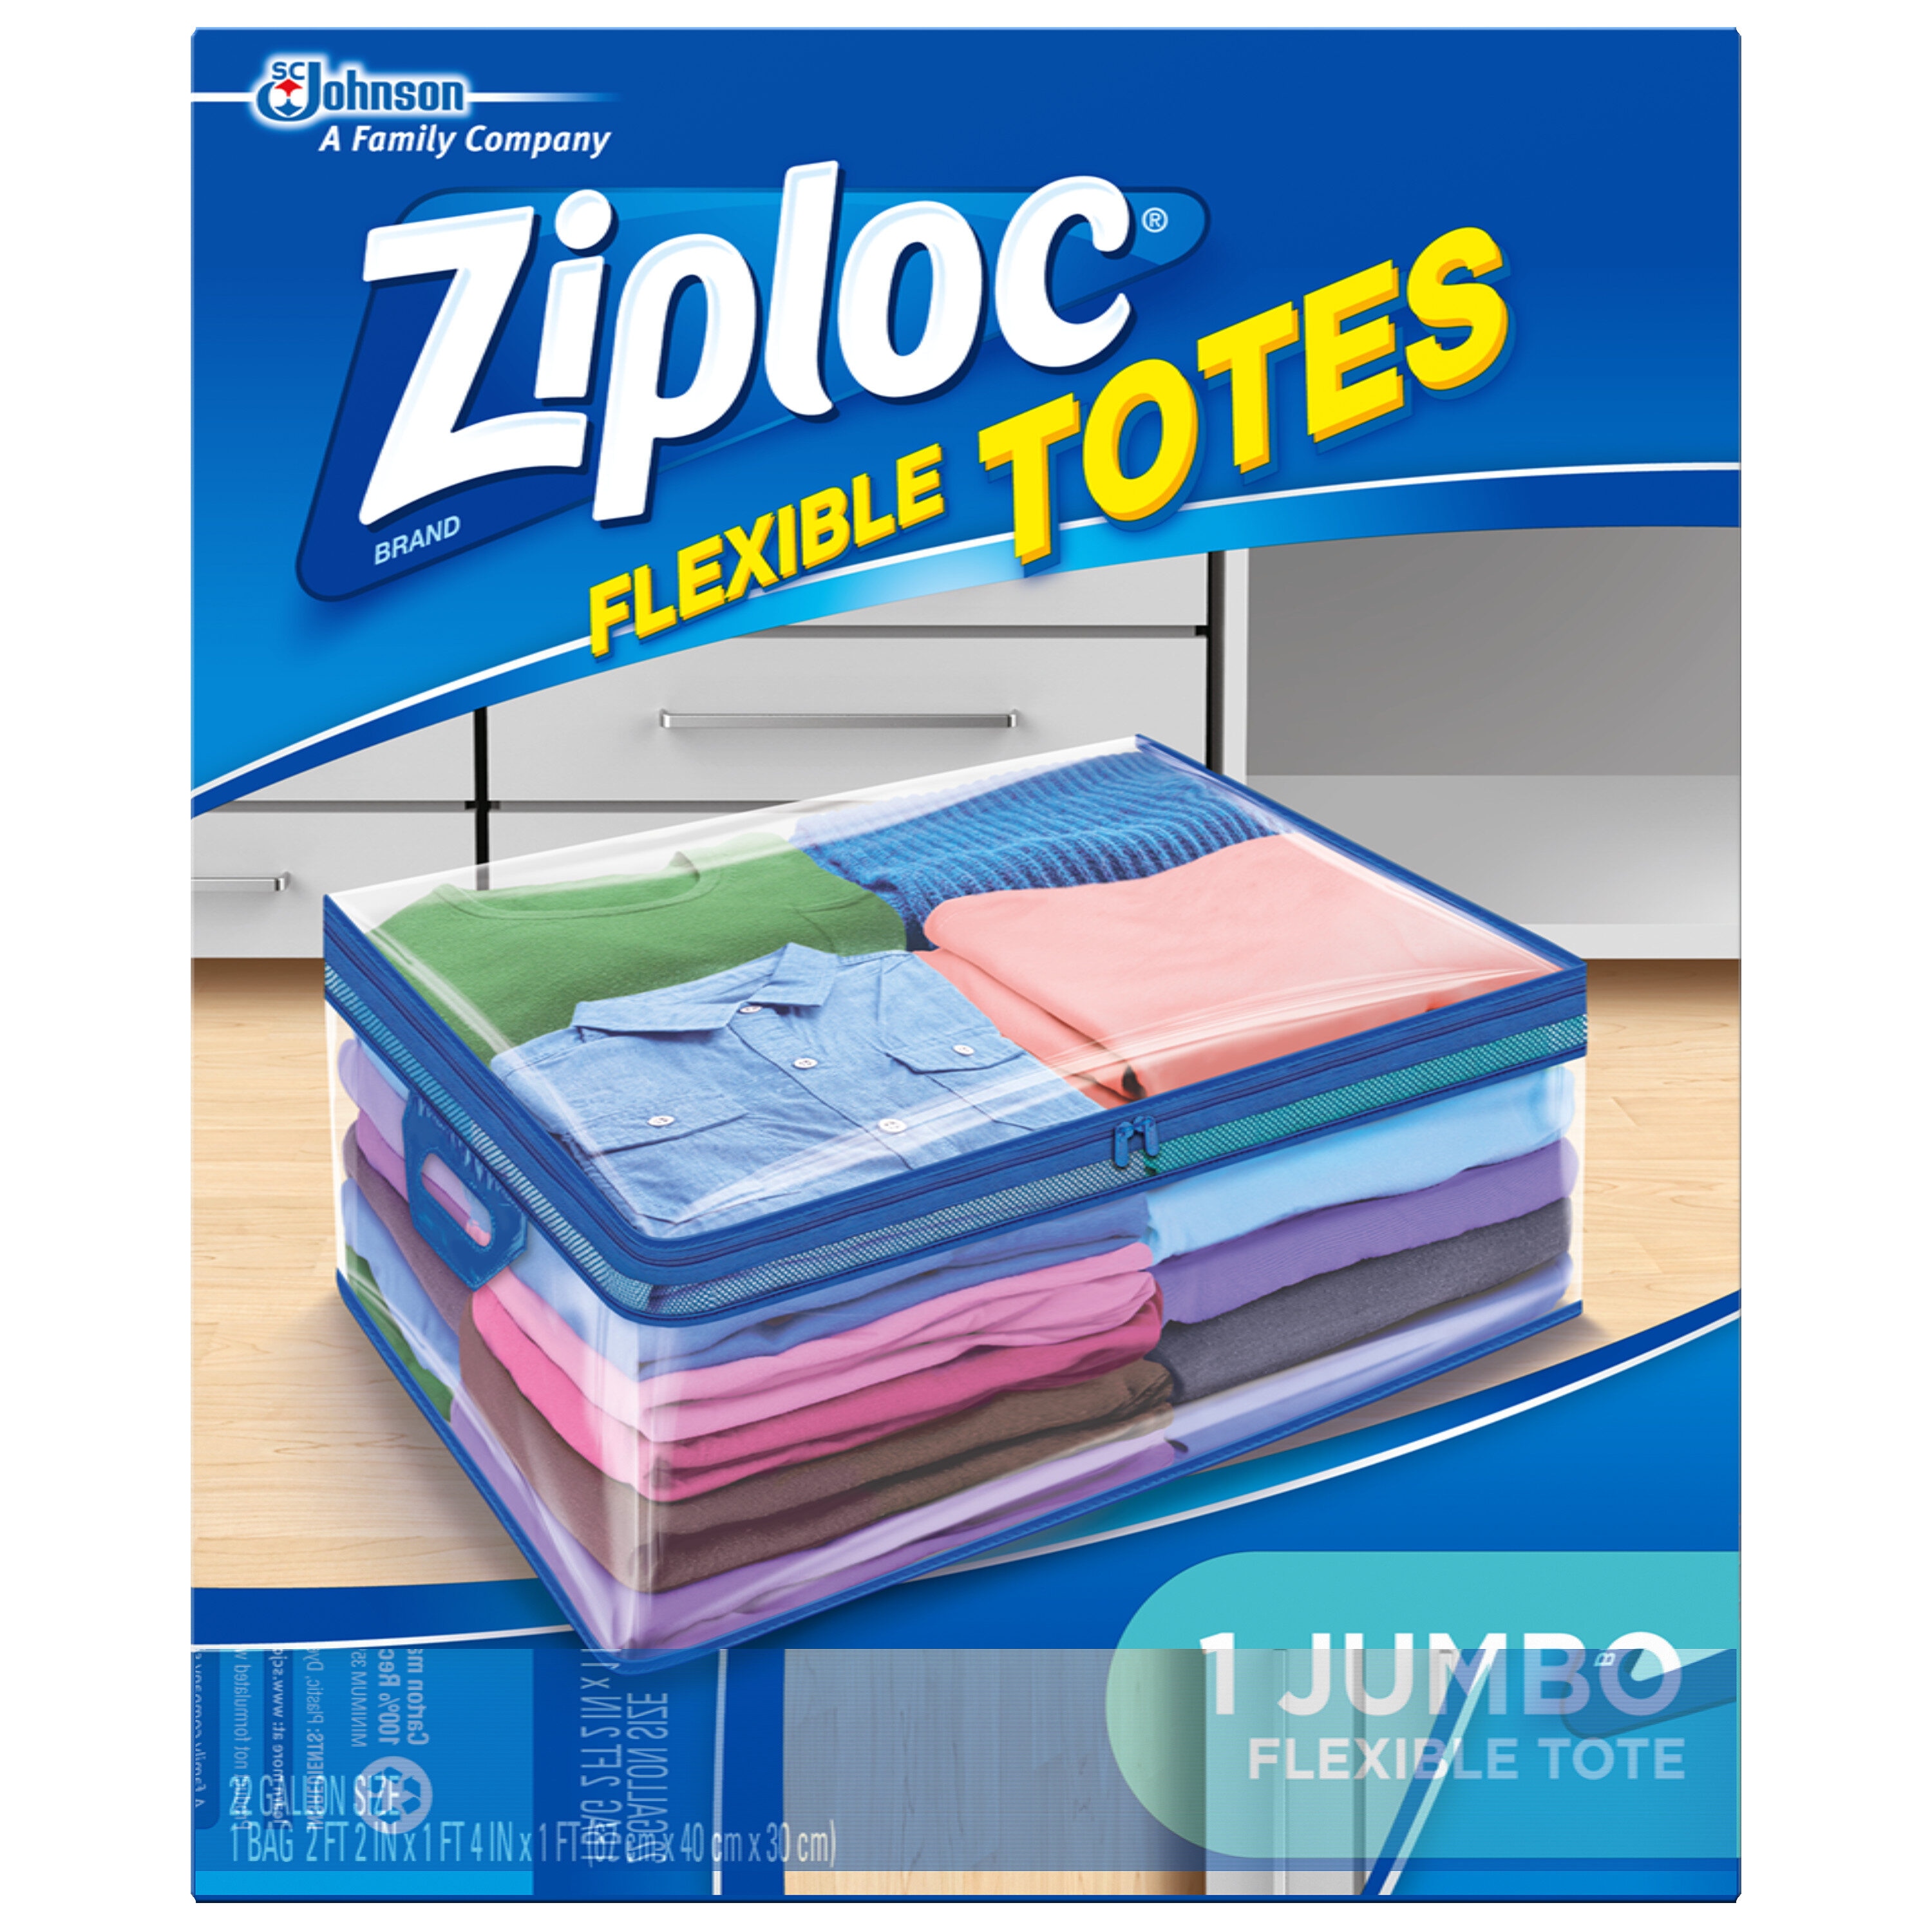 Ziploc Space Bag Organizer Set-Clear, 1 Jumbo Tote, 4 Large Flat Bags, 5 ct  